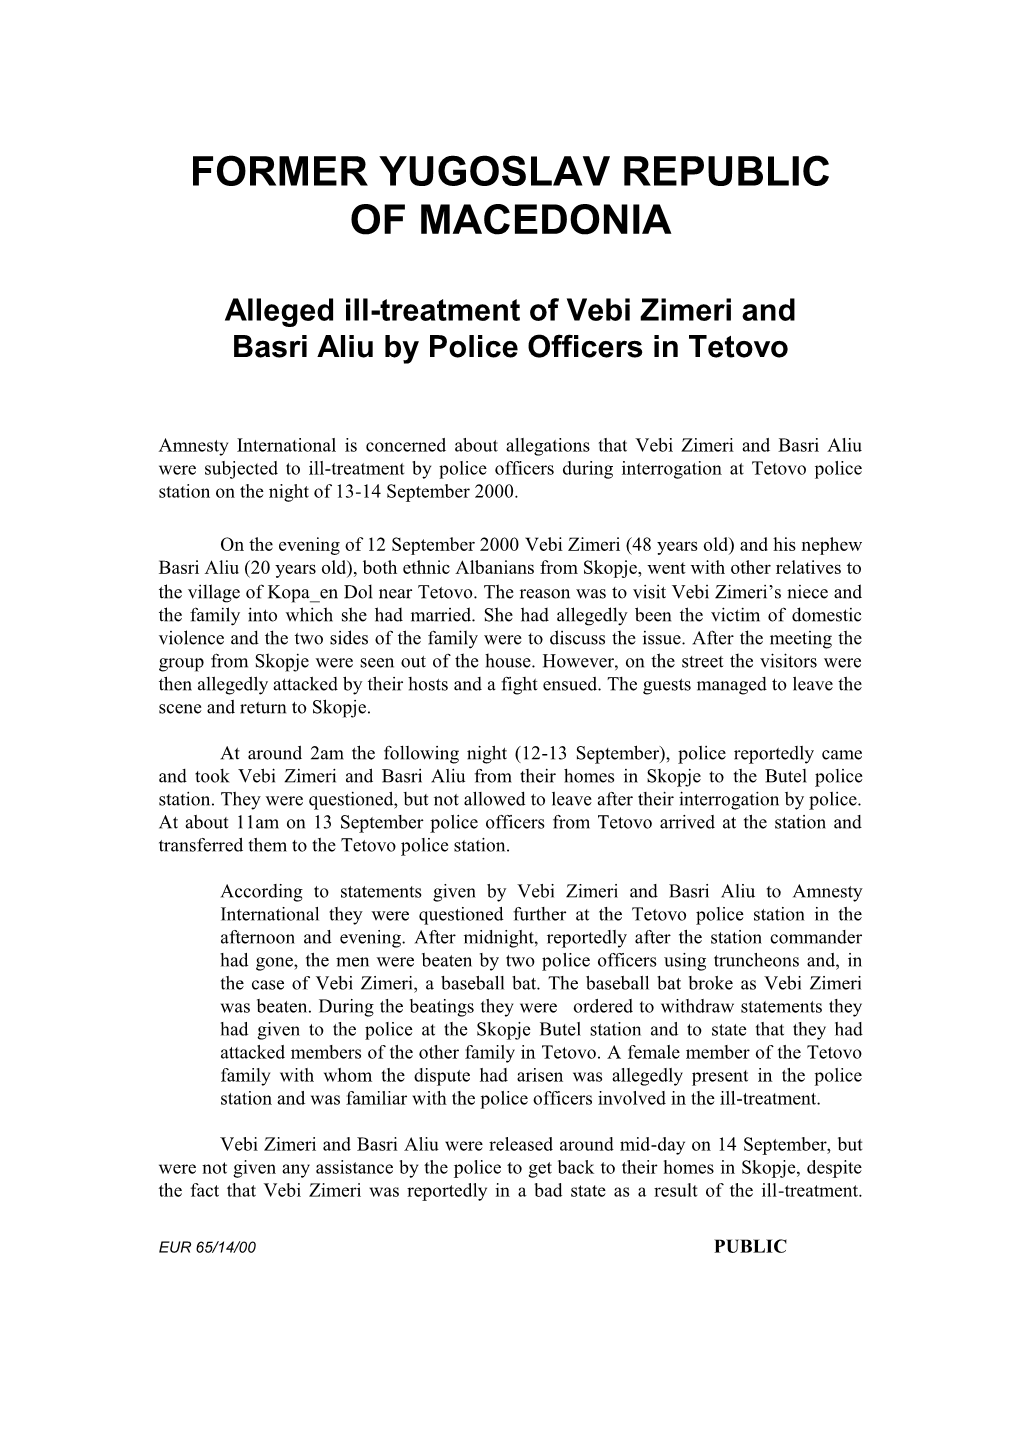 FORMER YUGOSLAV REPUBLIC of MACEDONIA Alleged Ill-Treatment